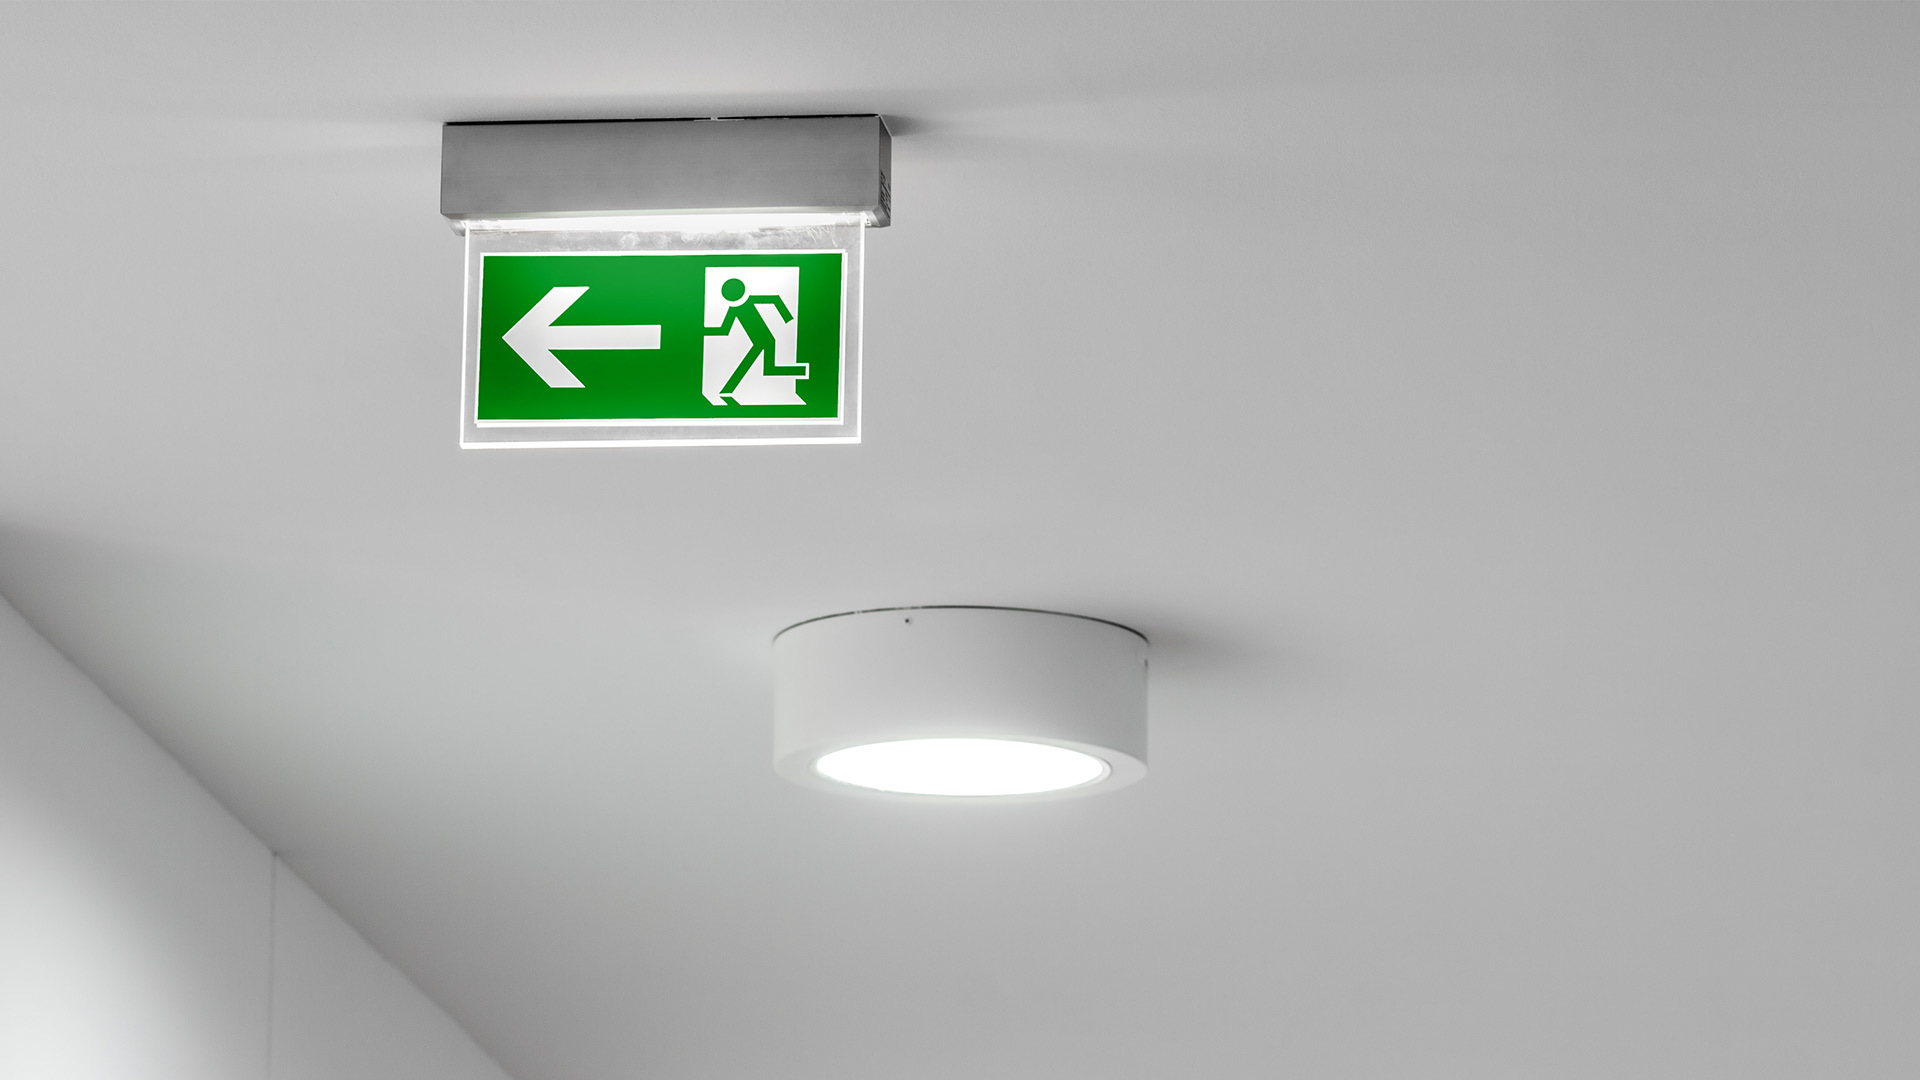 Fire Emergency Light Installation Guide: Fire Emergency Light Wiring Precautions